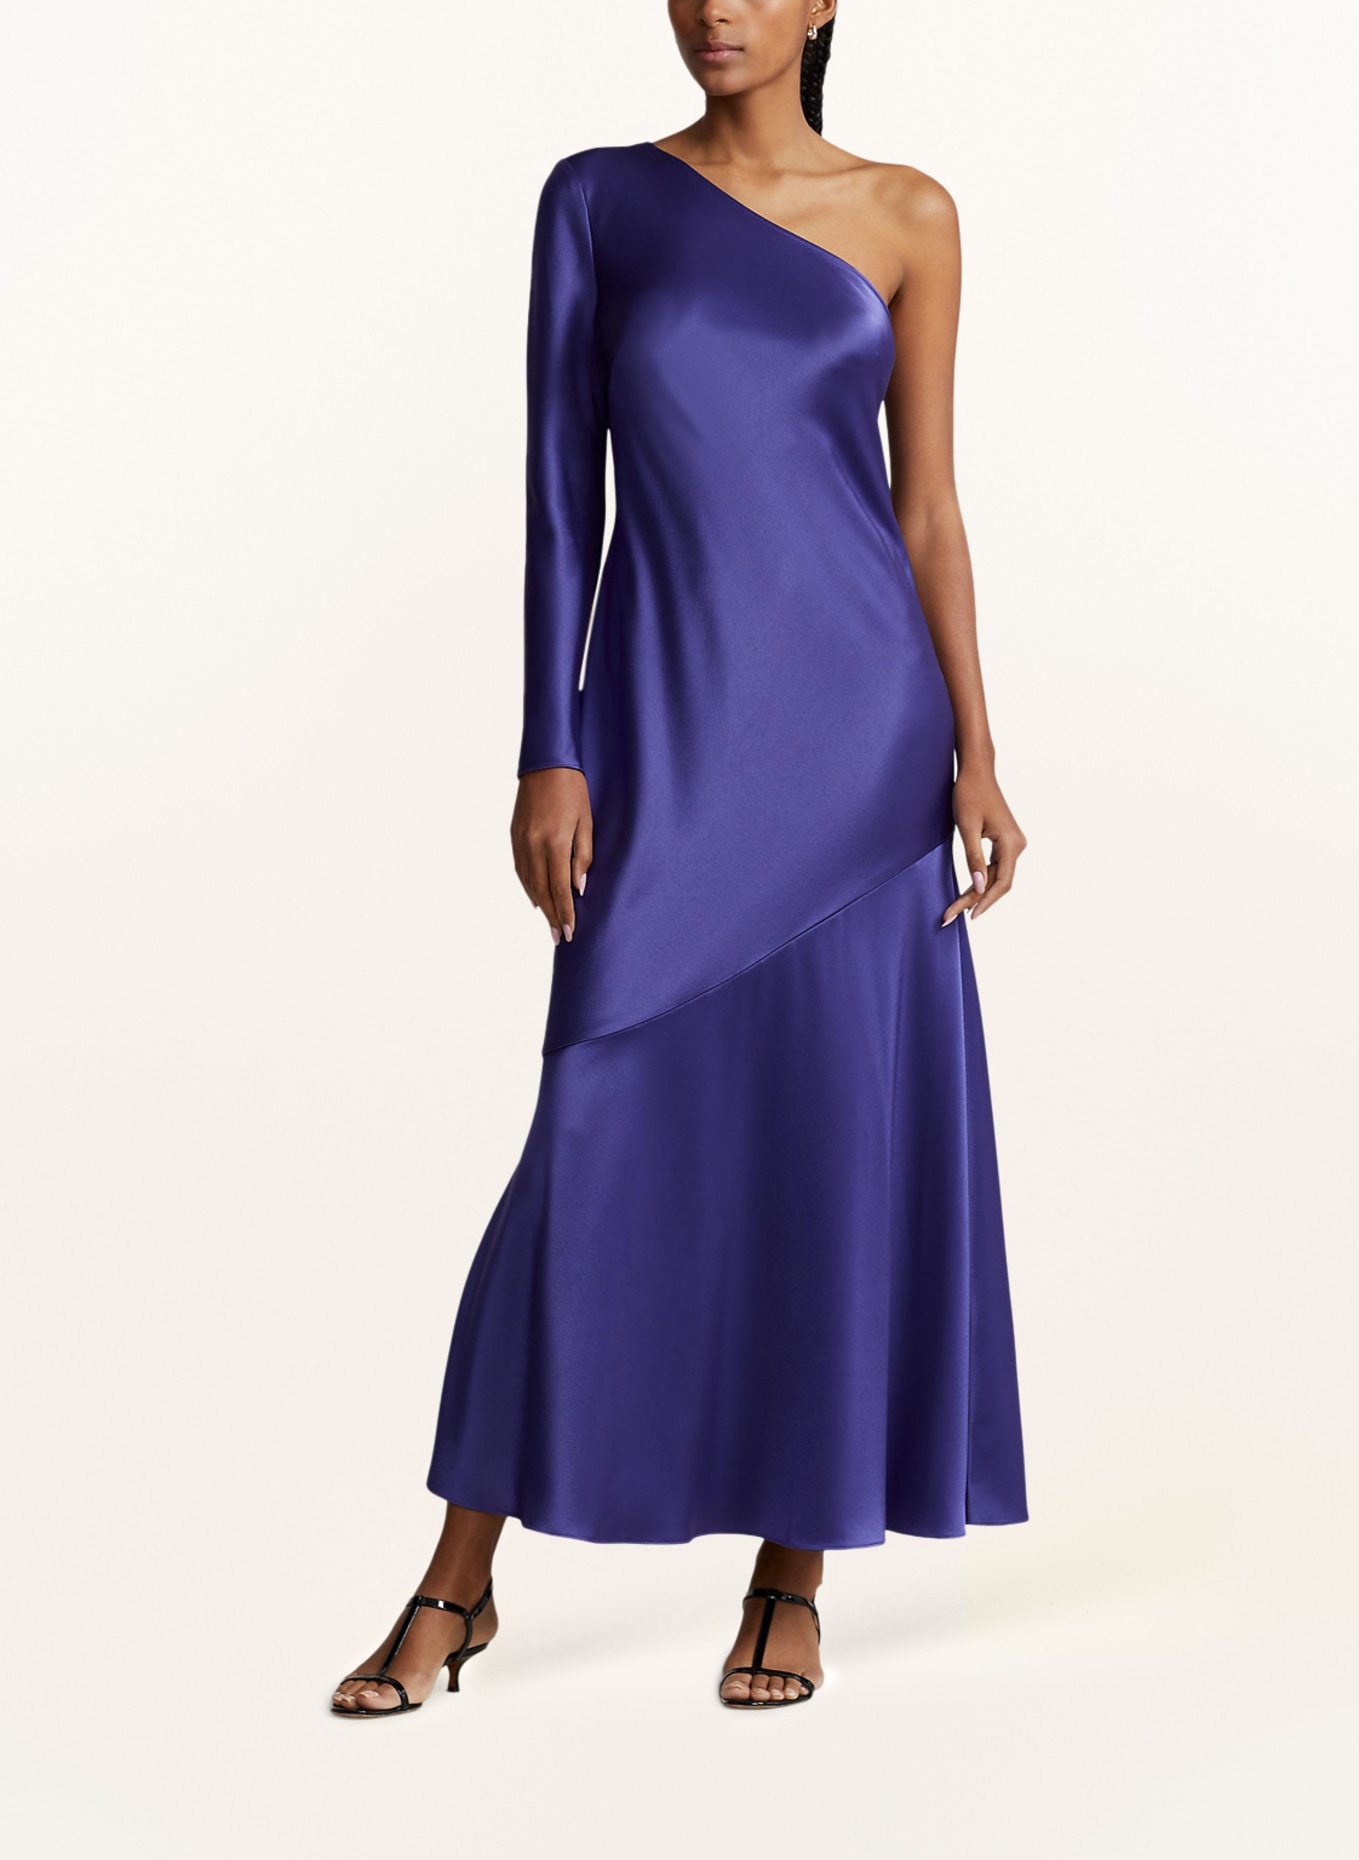 POLO RALPH LAUREN One-shoulder dress made of satin, Color: DARK BLUE (Image 2)